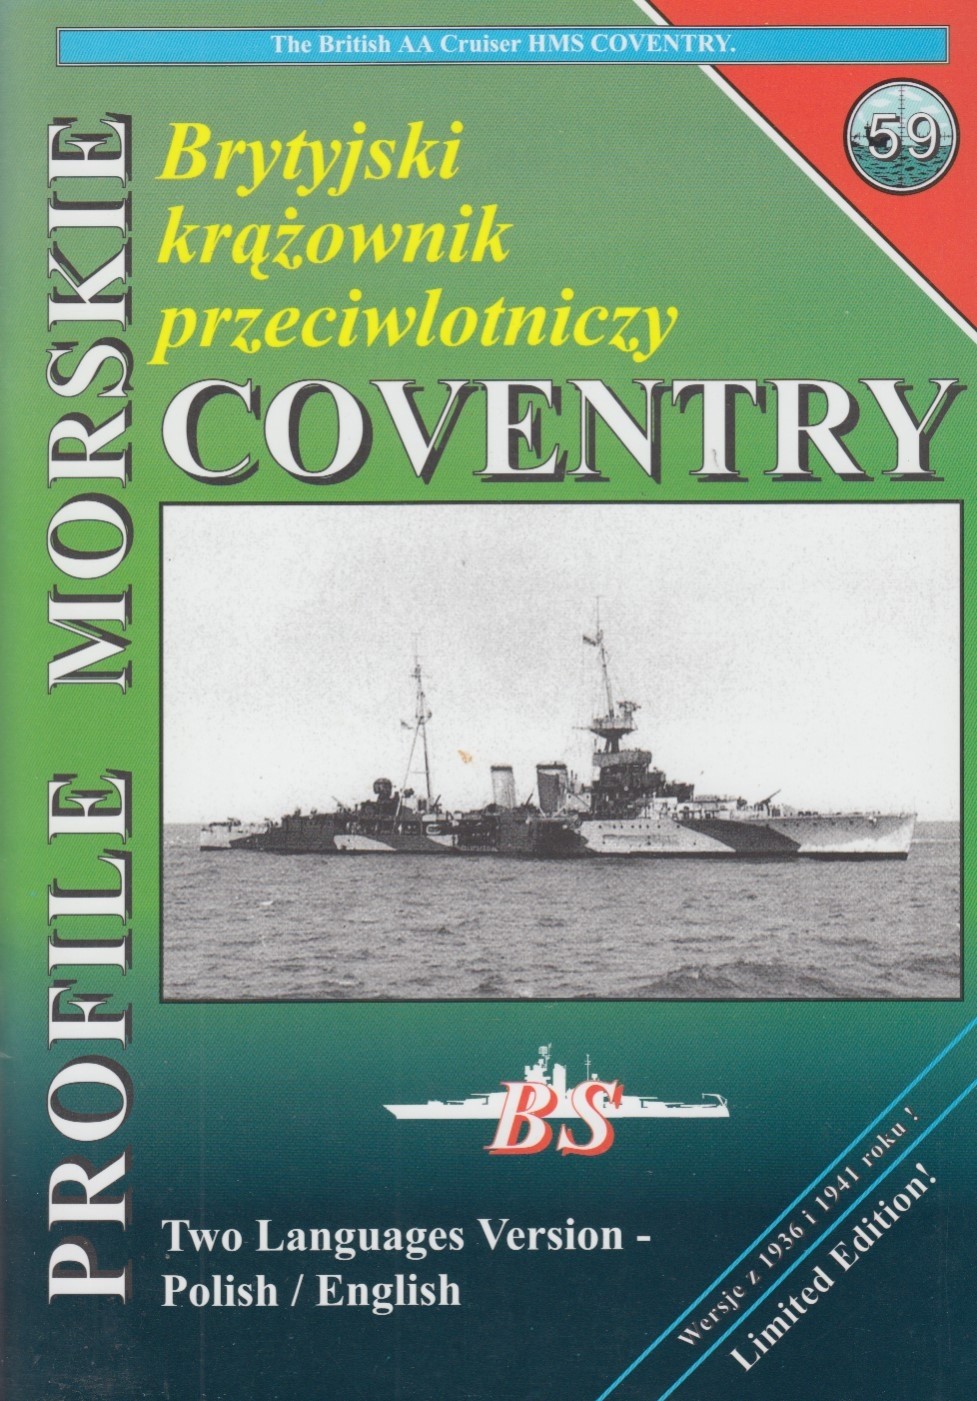 AA cruiser HMS COVENTRY